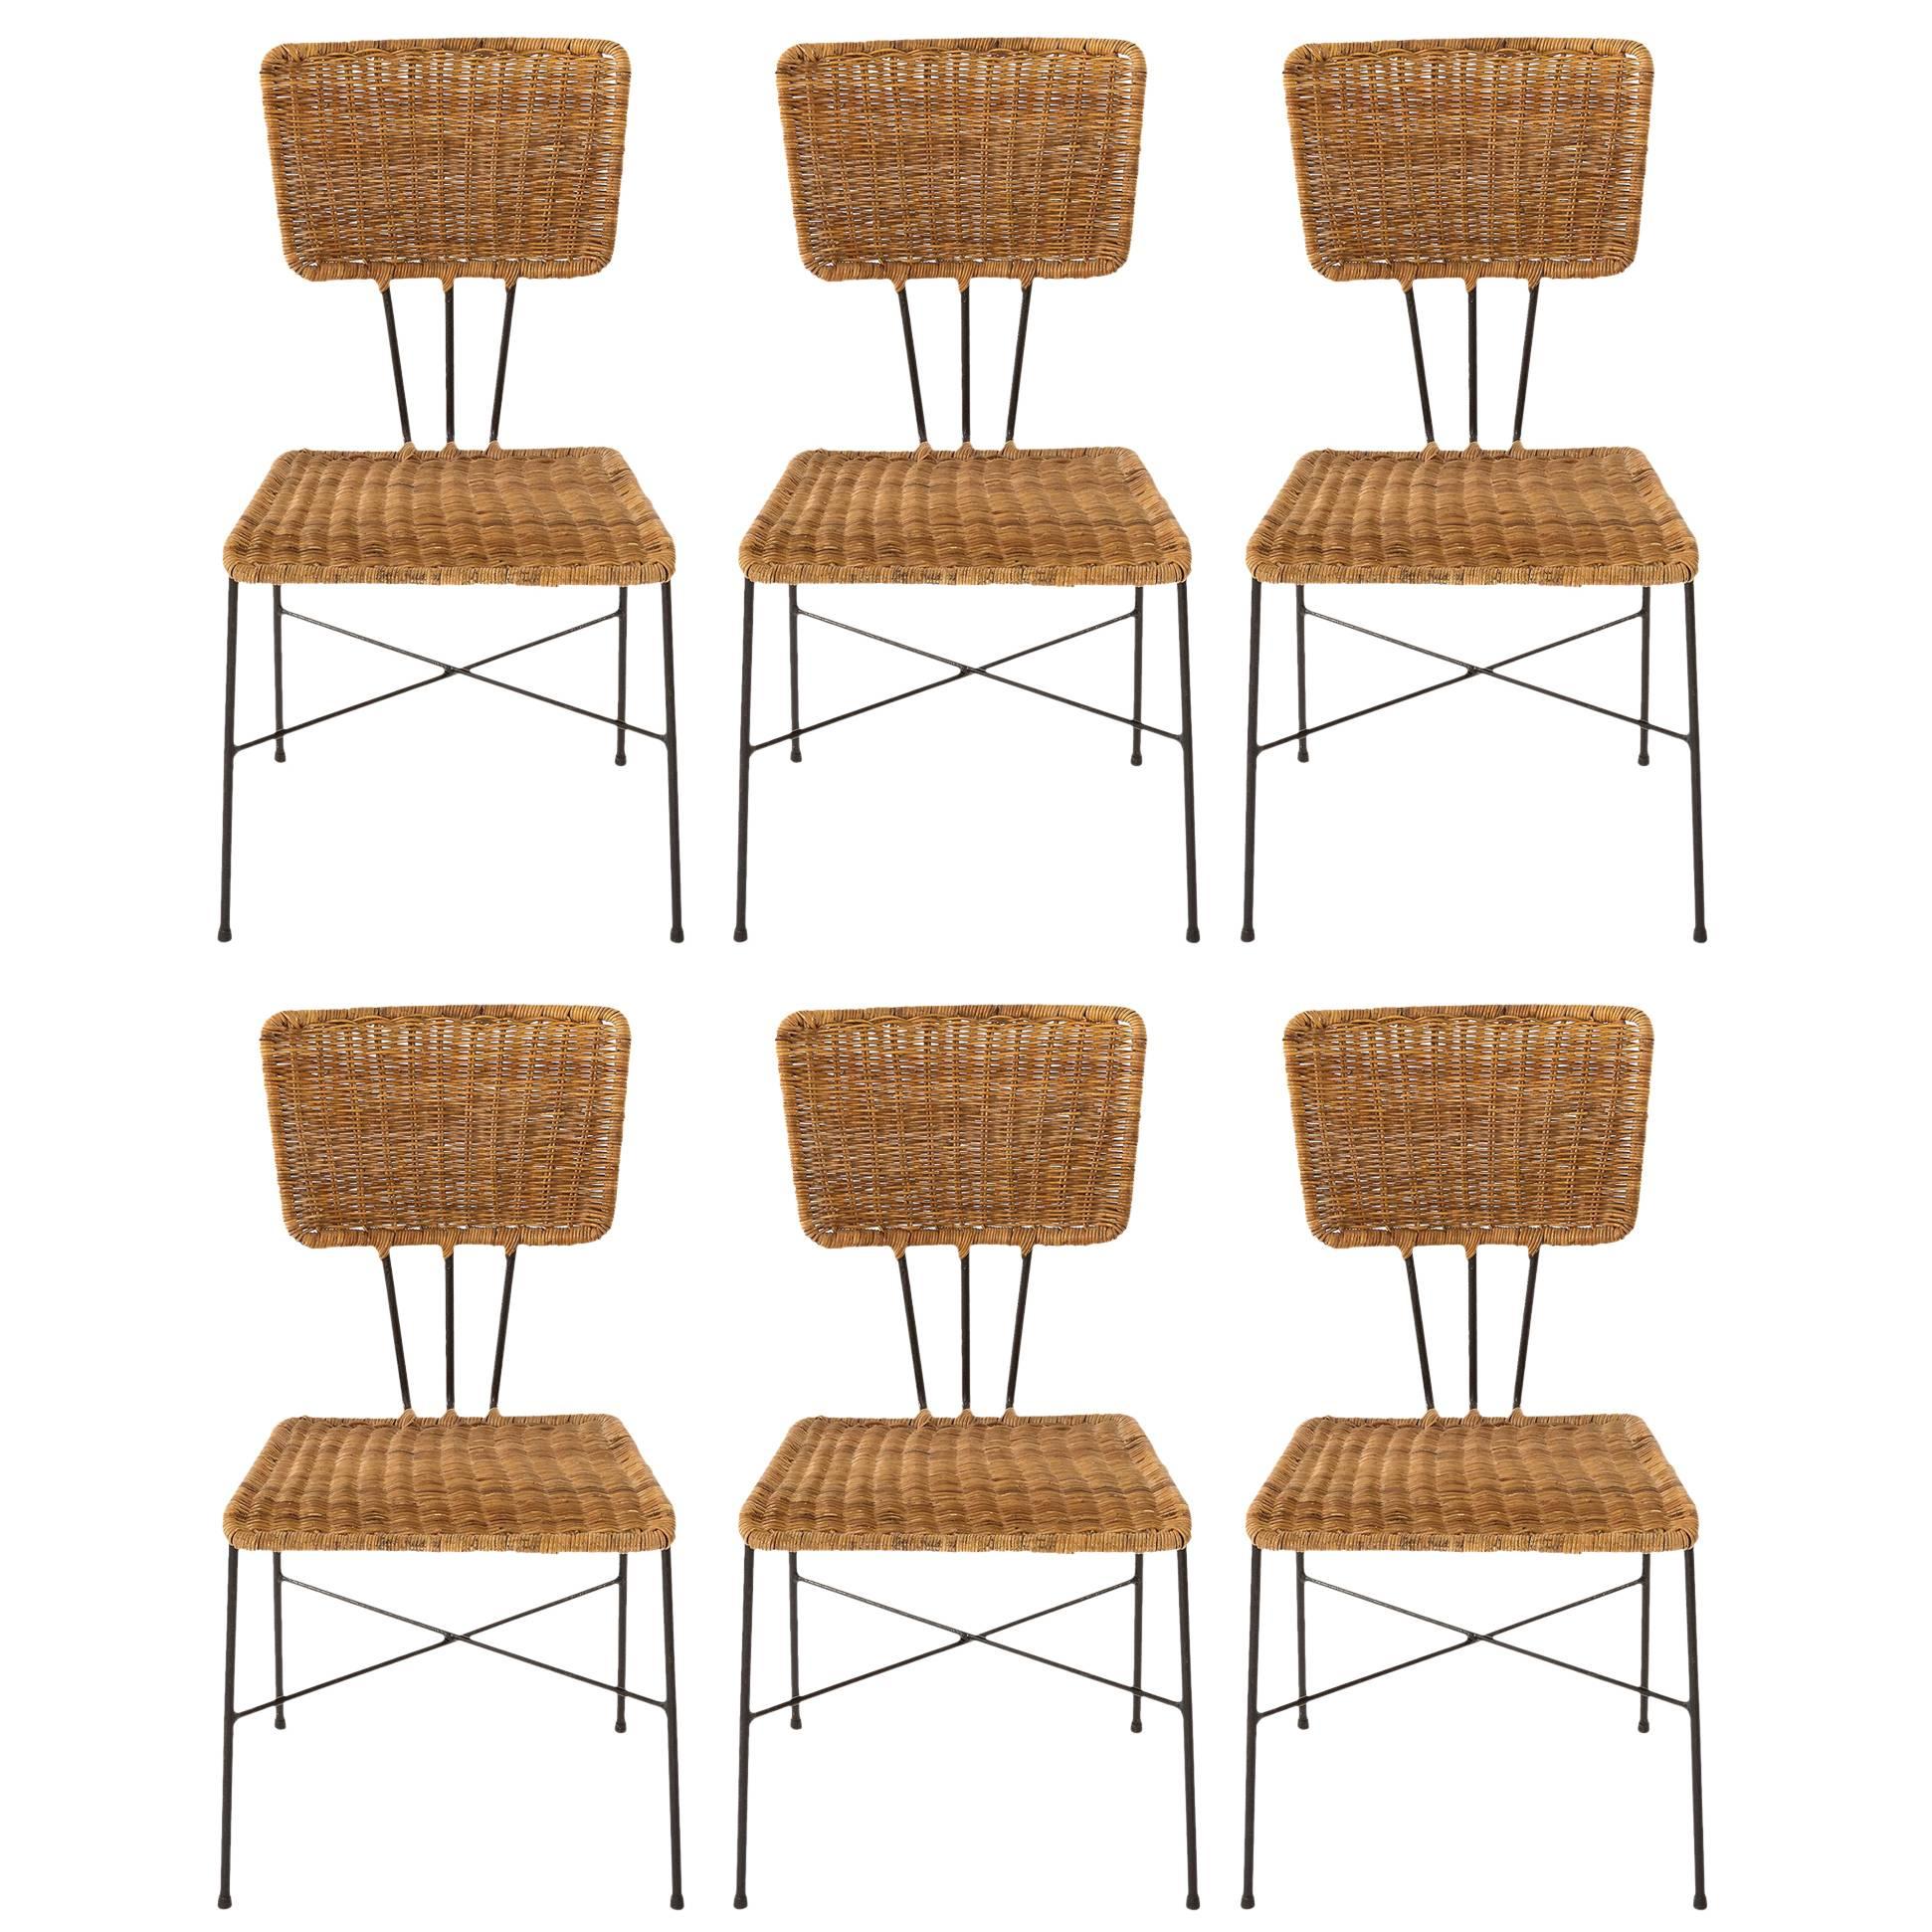 Six Wicker Chairs, 1950s